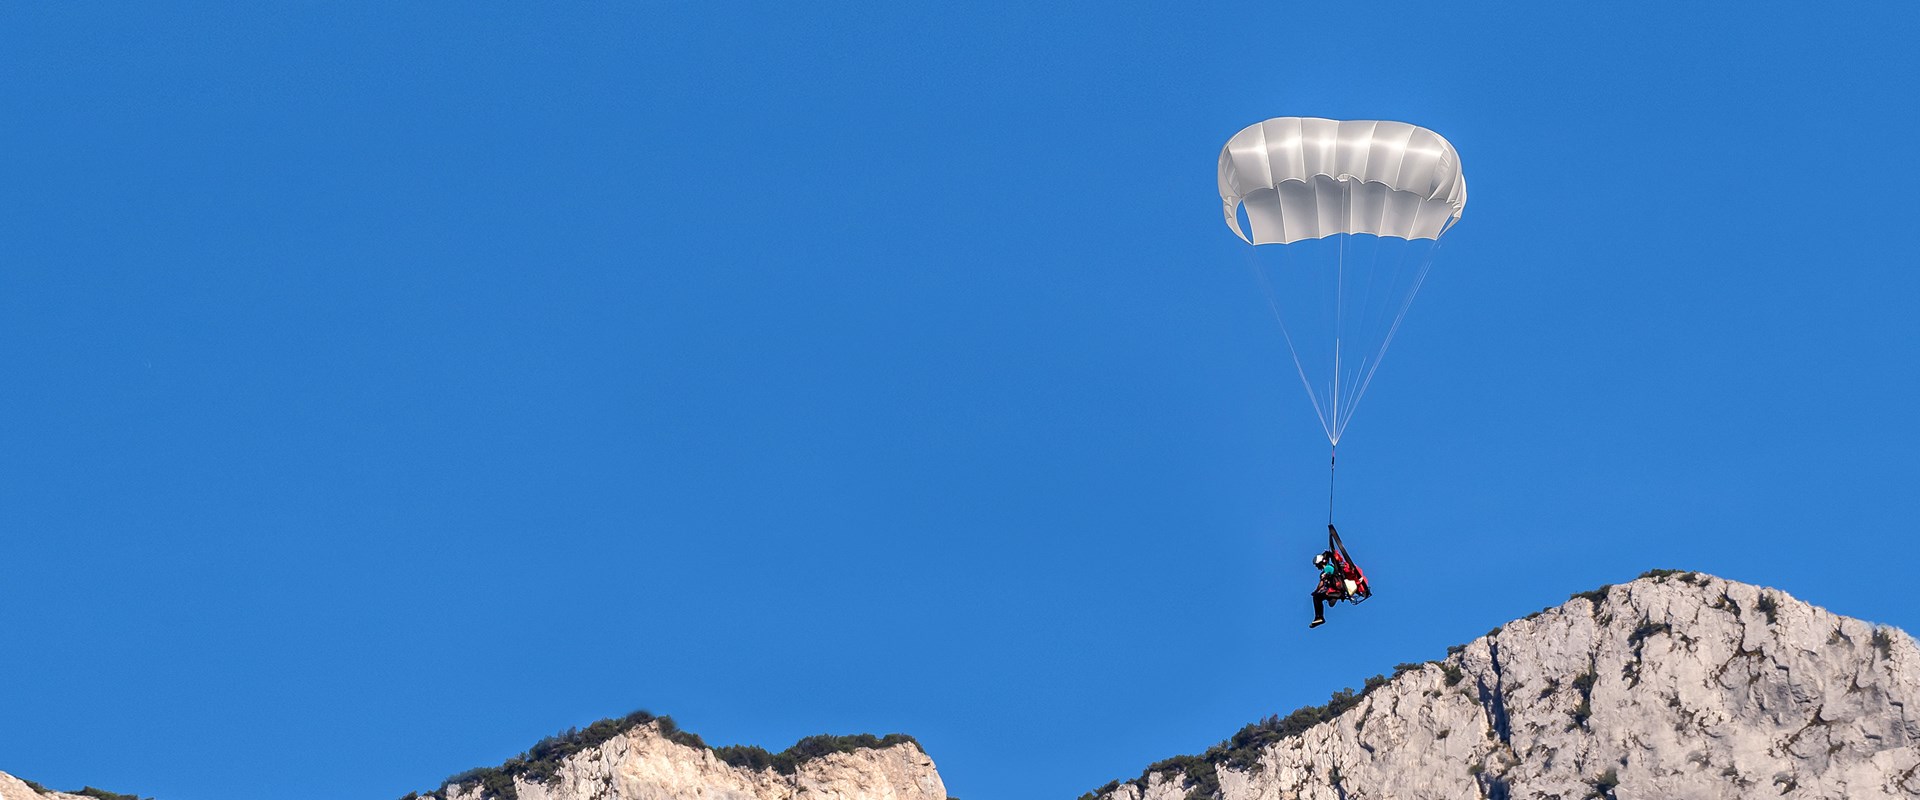 Aegis SQ - Modern square rescue parachute